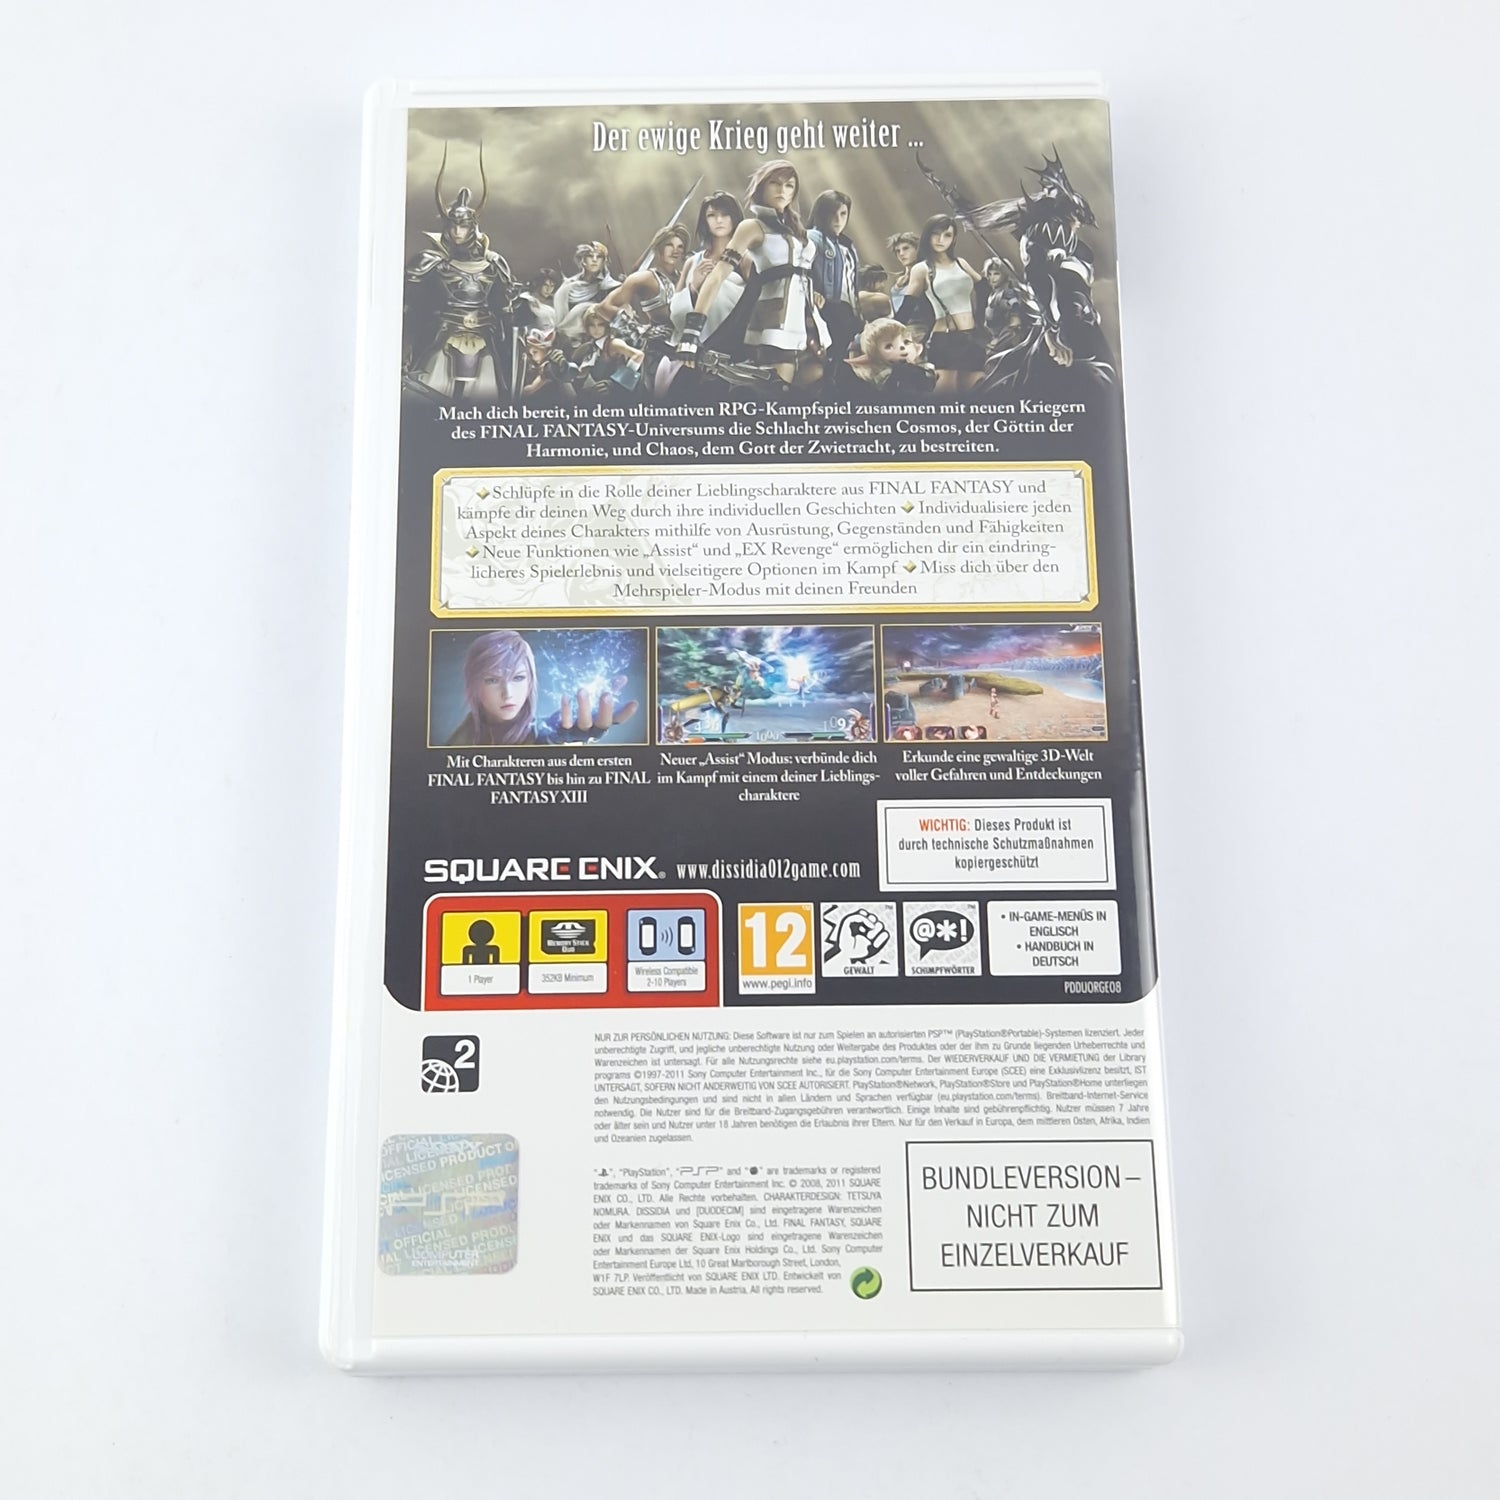 Playstation Portable Spiel : Dissidia Final Fantasy 012 + Bradygames Guide - PSP